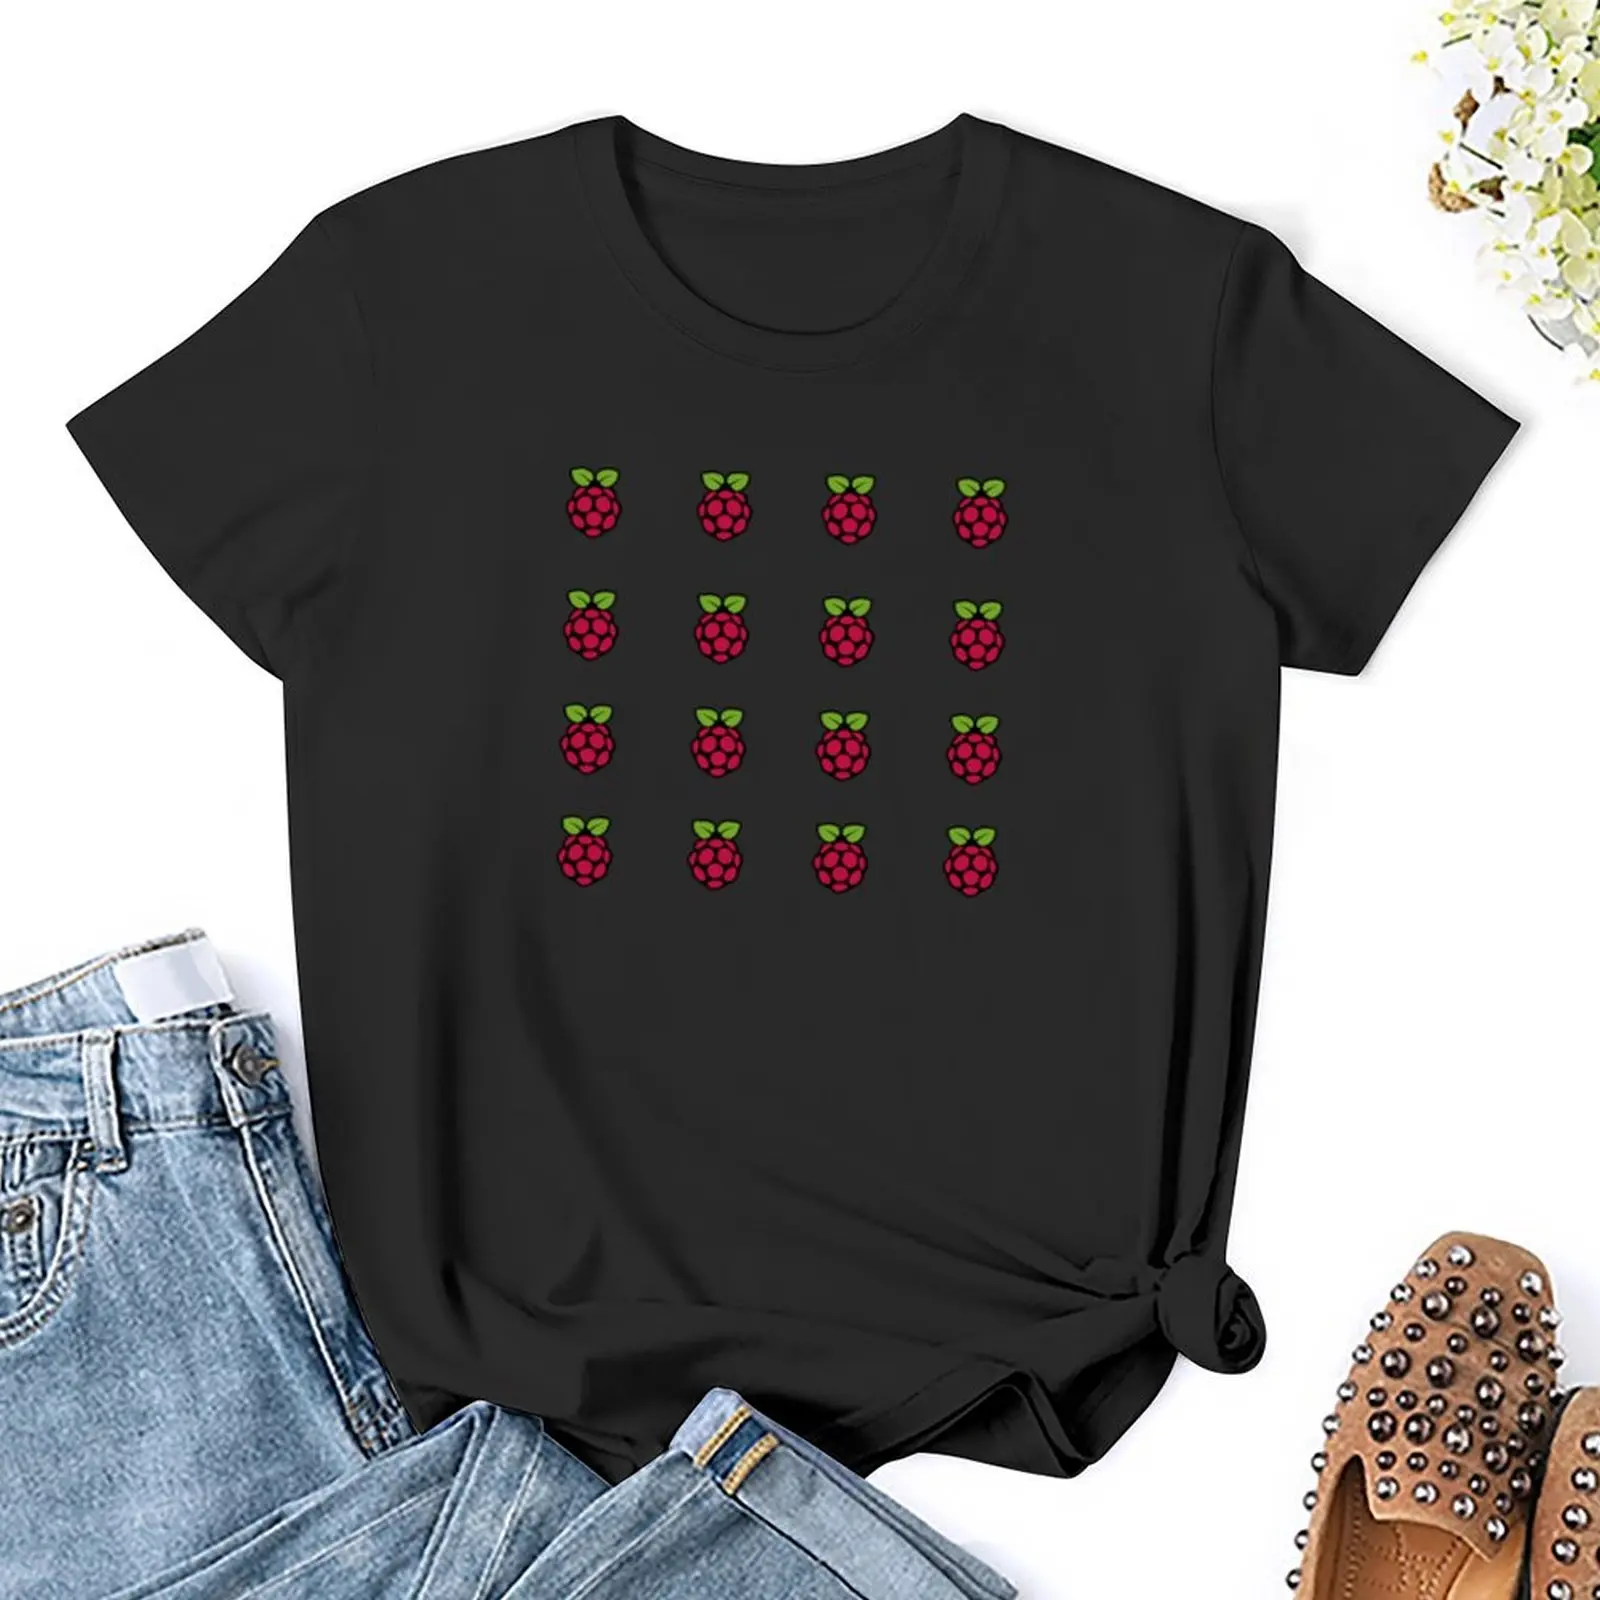 raspberry pi muti T-shirt Short sleeve tee summer top shirts graphic tees plain t shirts for Women